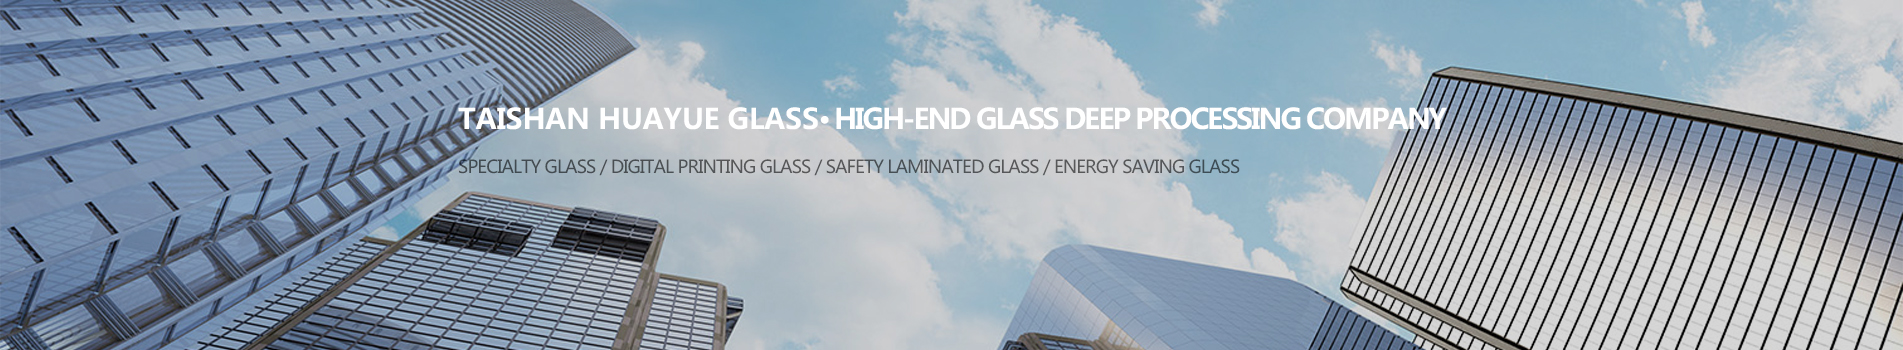 Hollow energy-saving glass